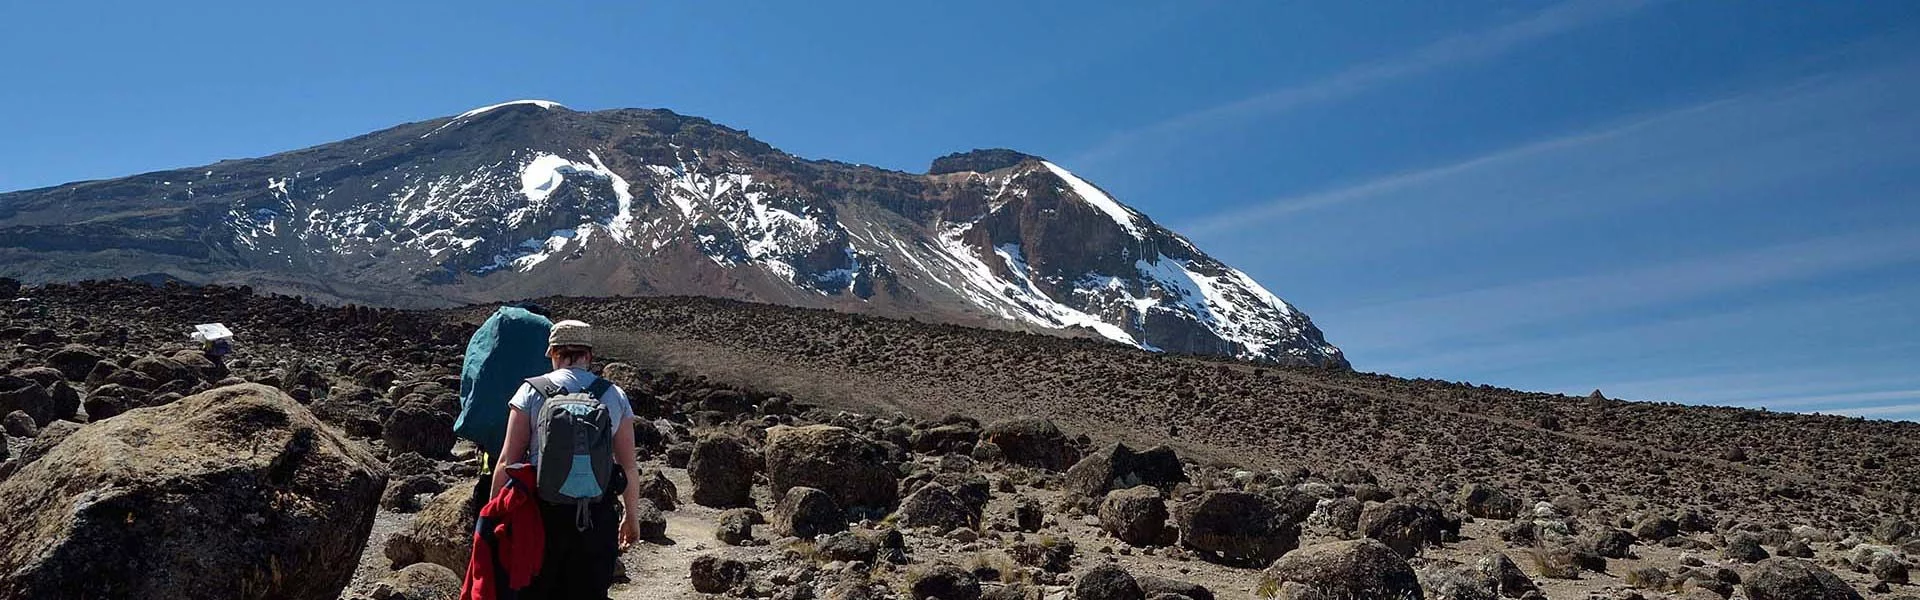 Solo Climb Kilimanjaro